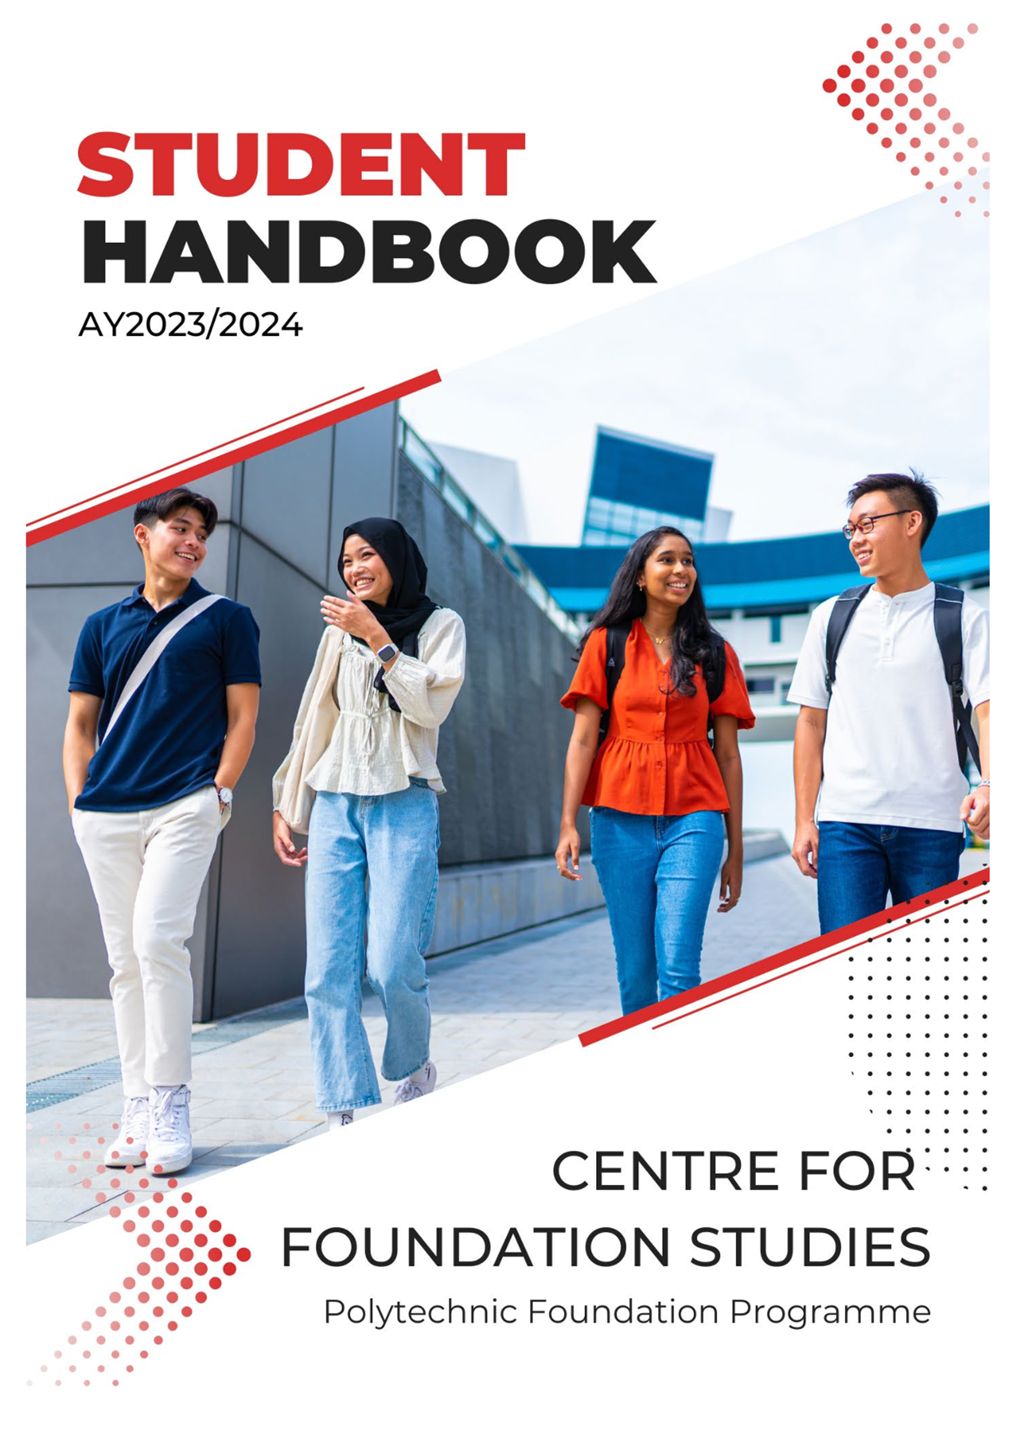 Centre for Foundation Studies Polytechnic Foundation Programme student handbook. AY2023/24